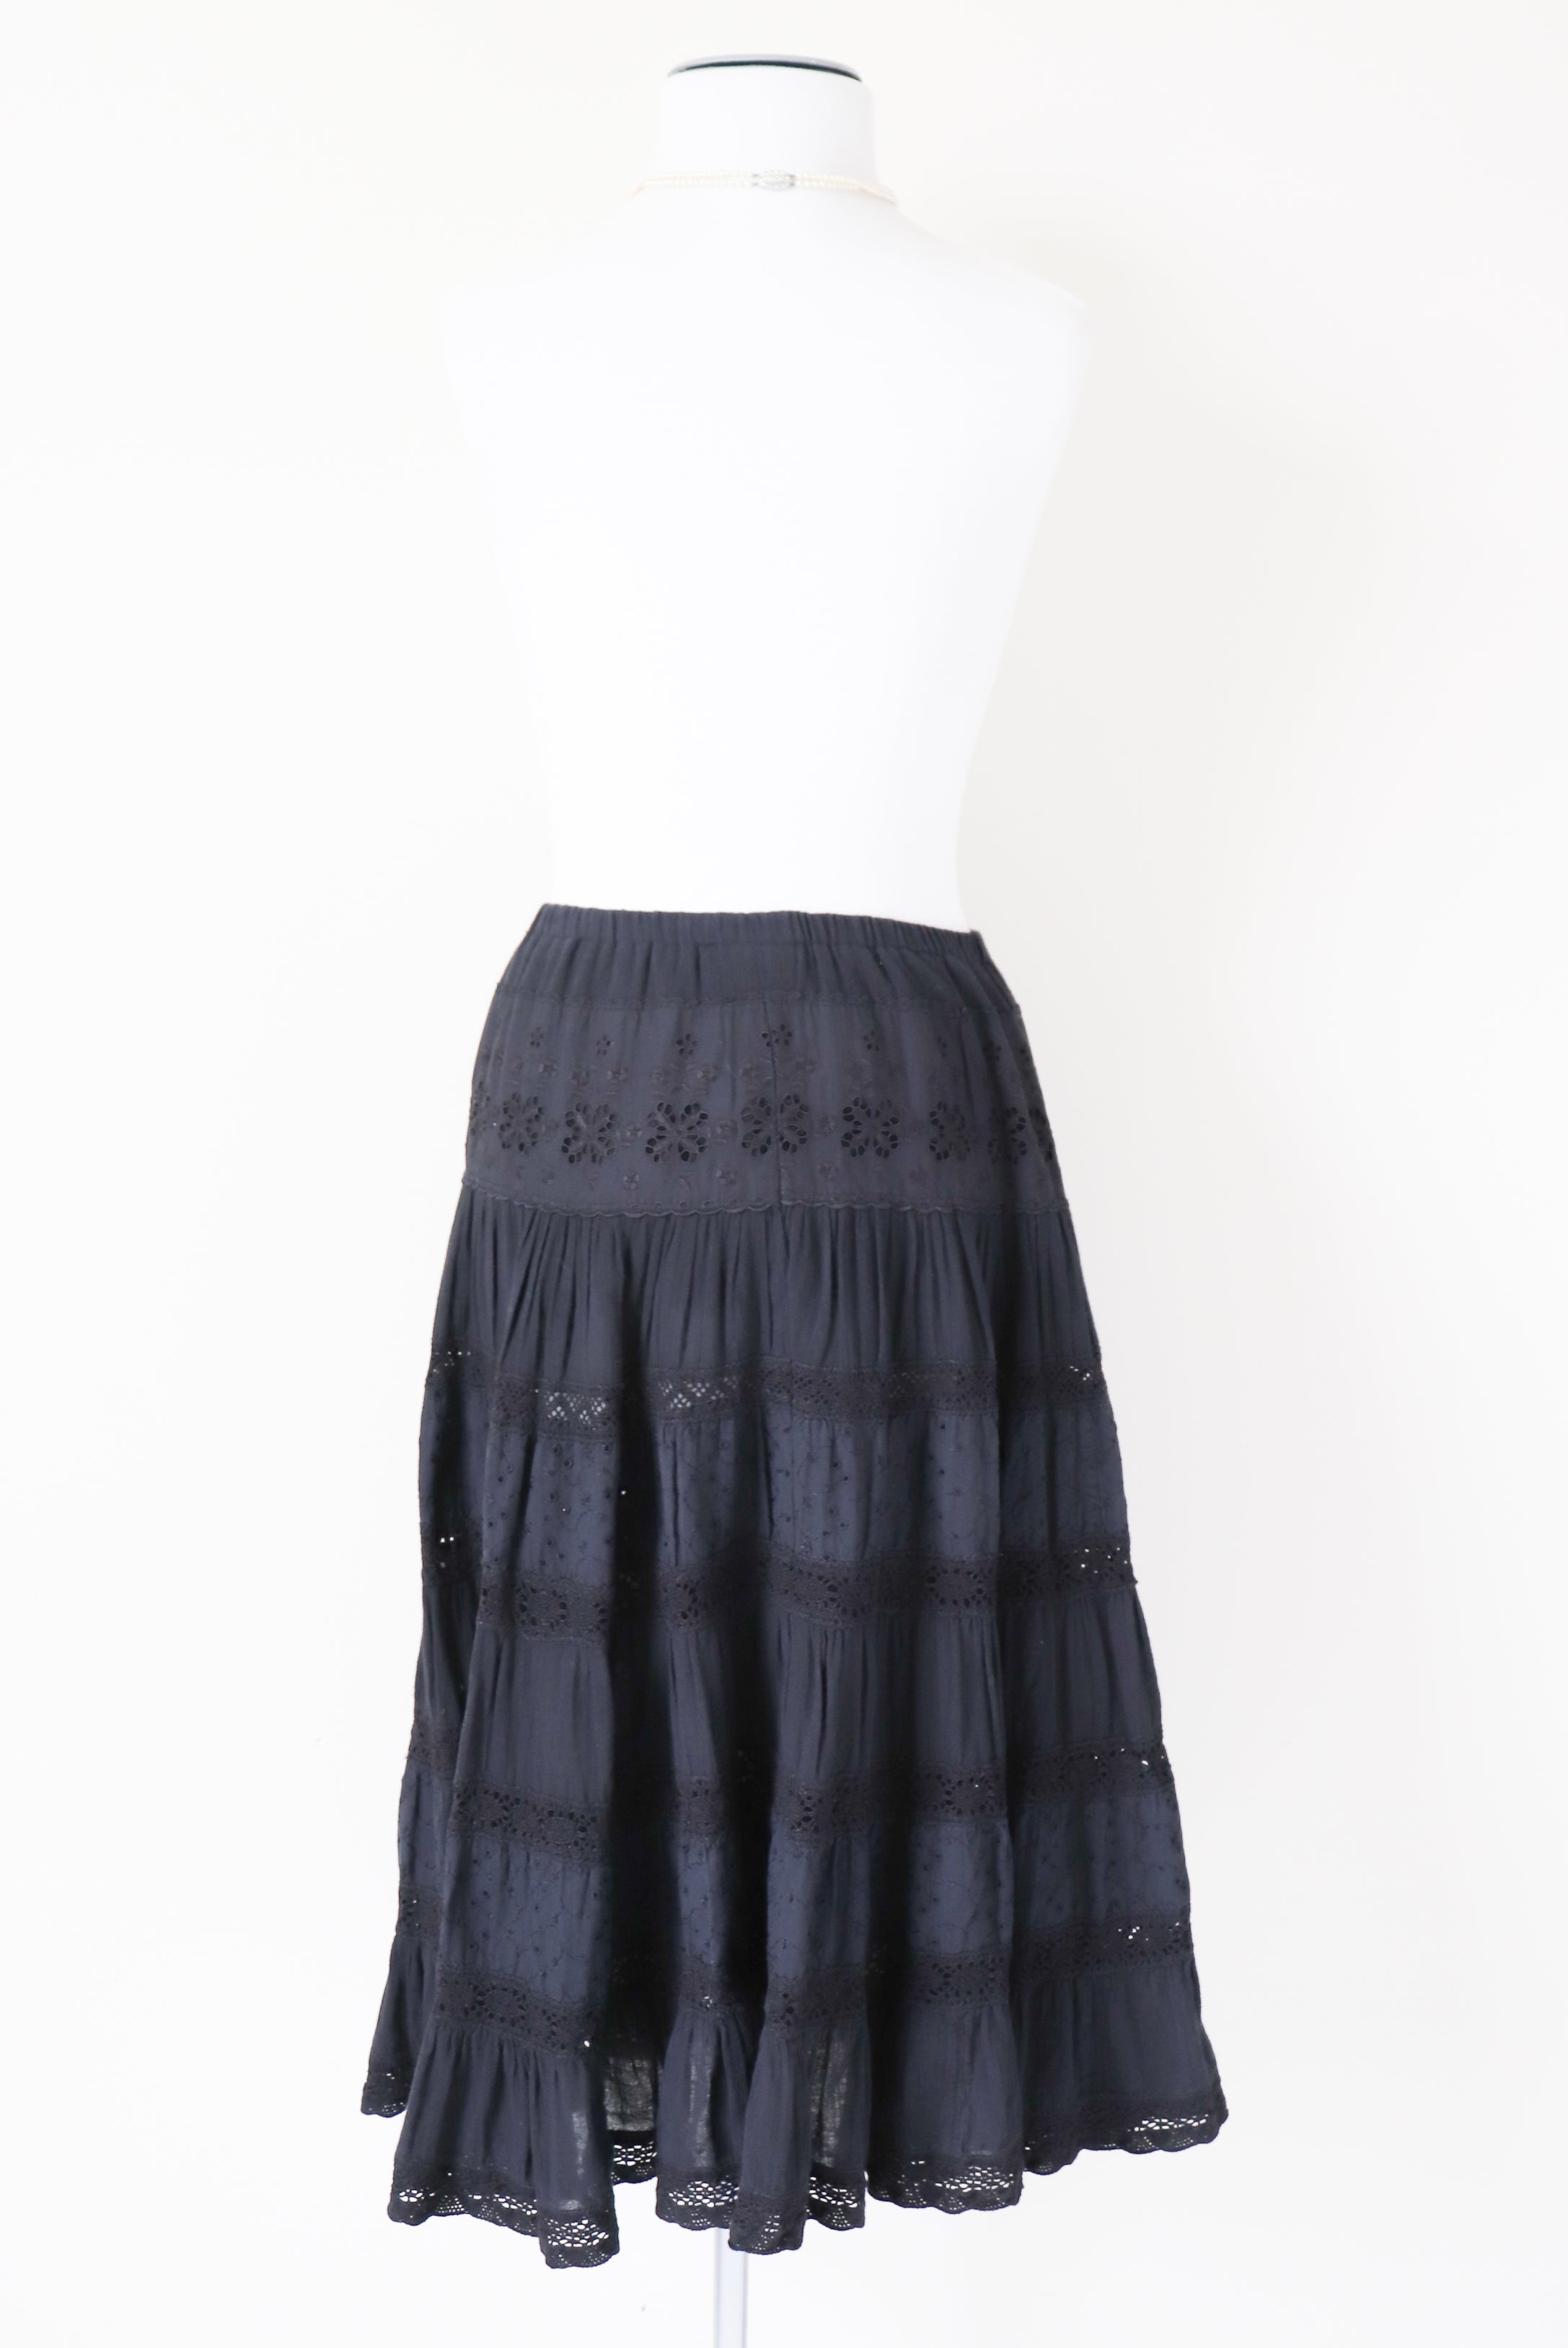 Black Prairie Peasant Skirt - Elasticated Waist - S / M - UK 10 / 12